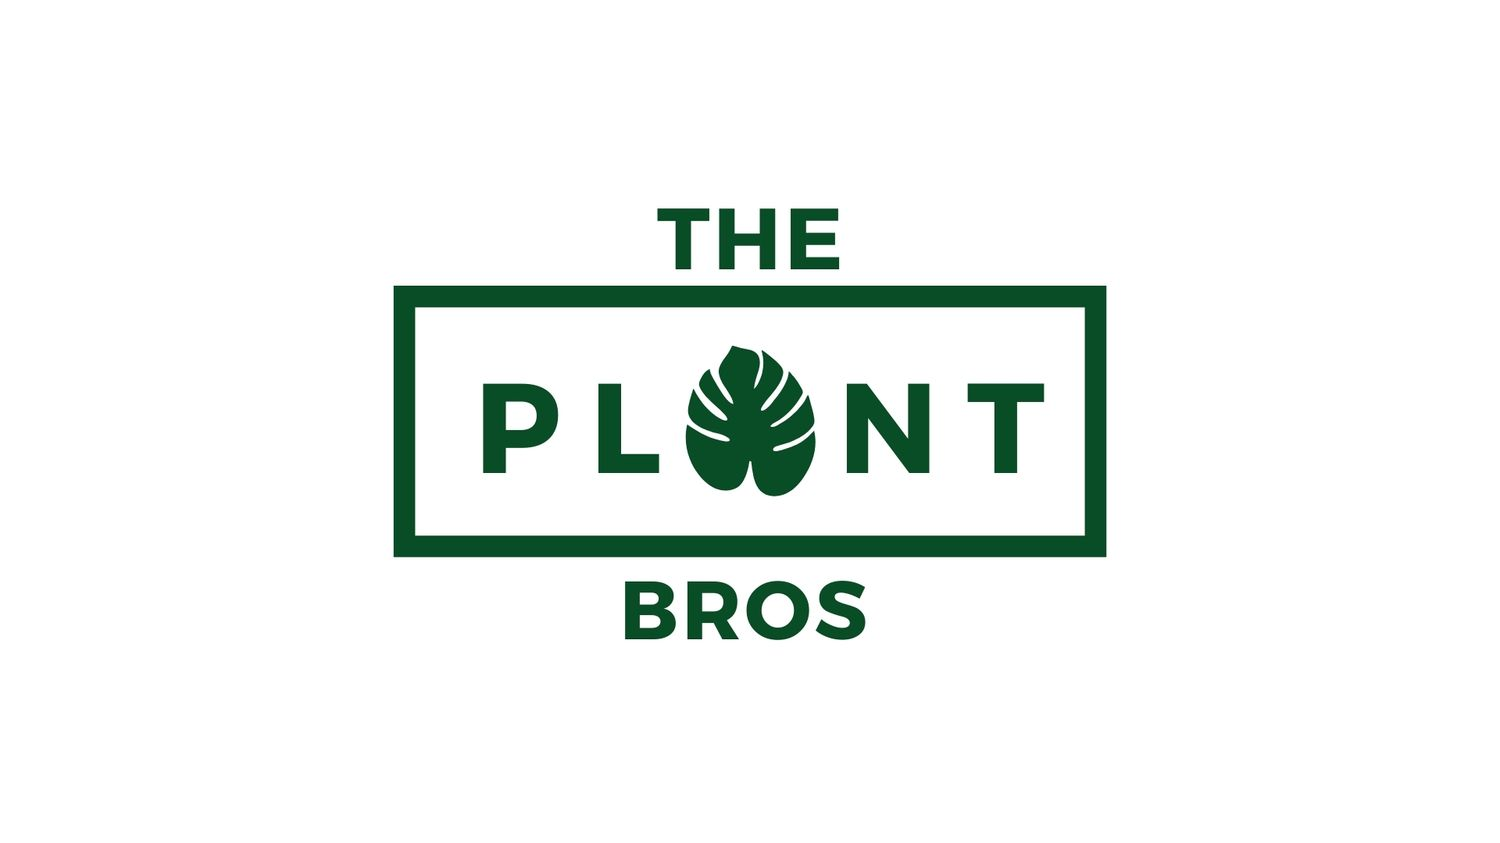 The Plant Bros